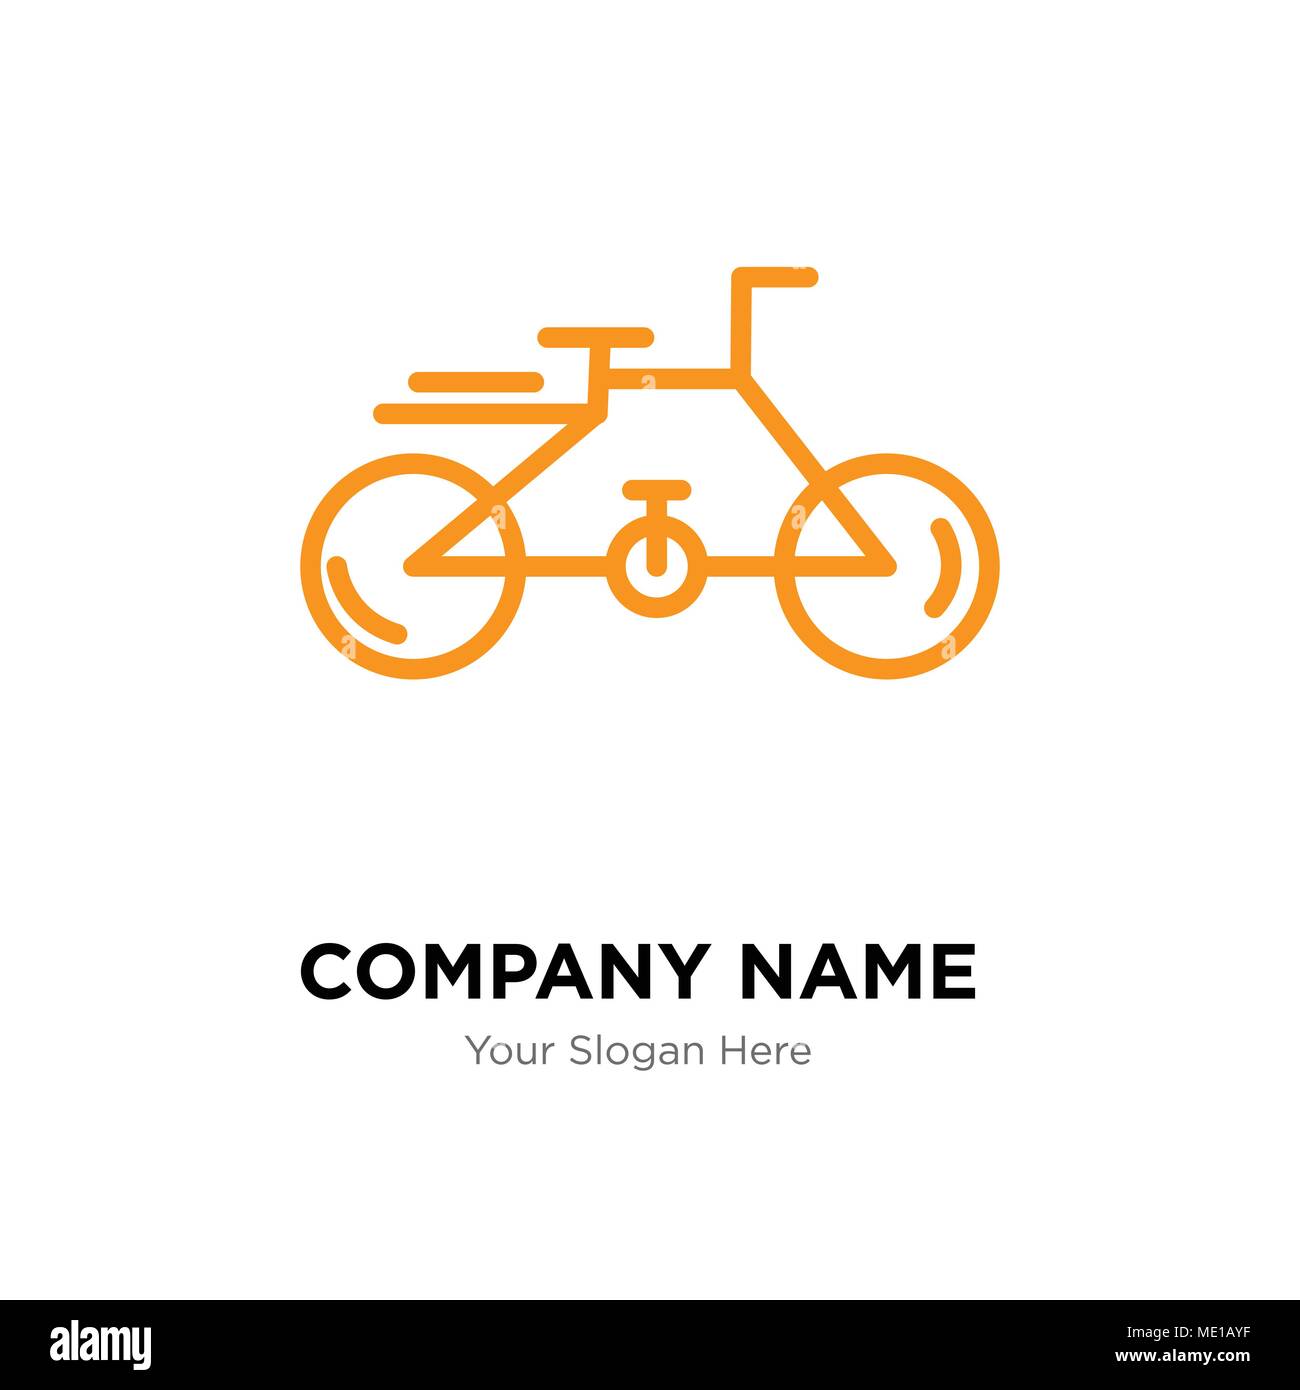 bike corporate